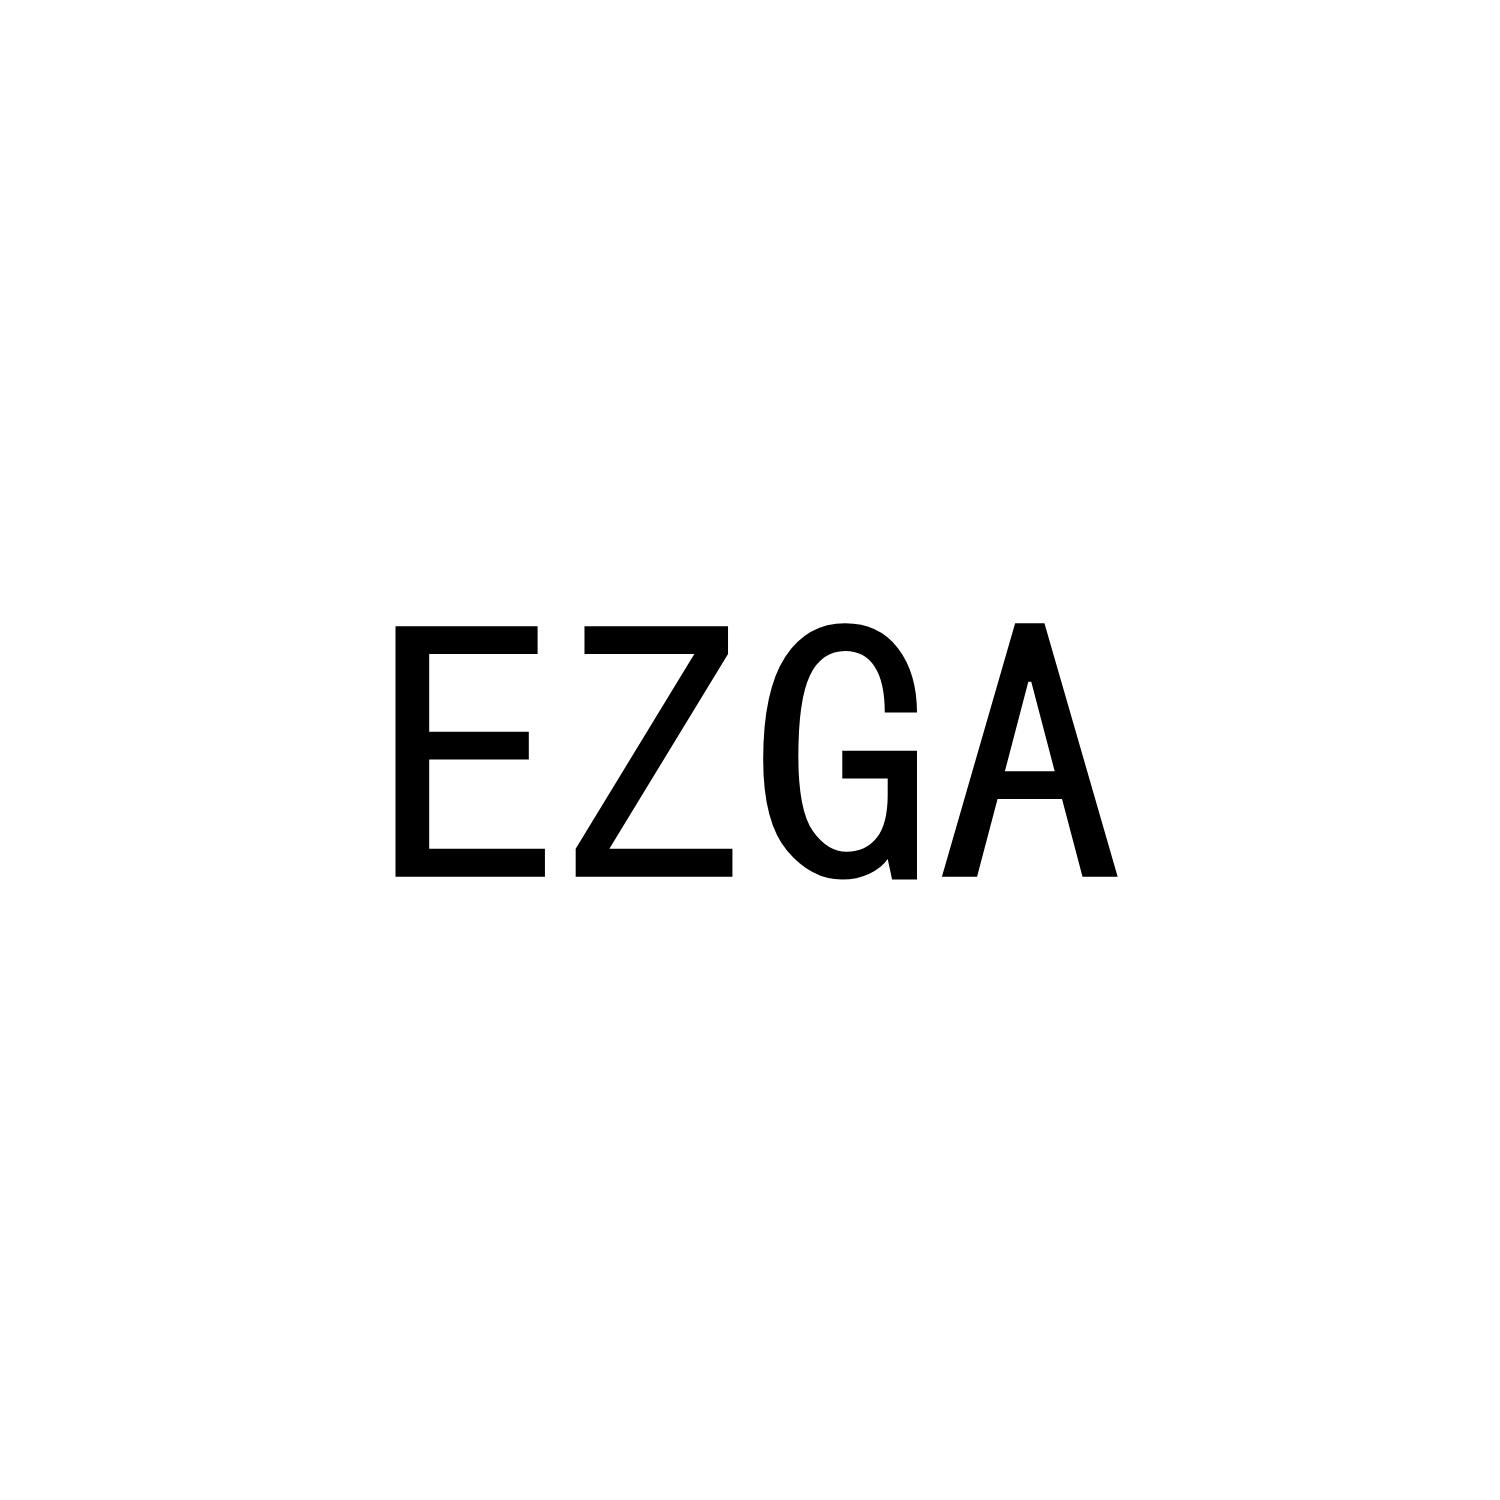 EZGA